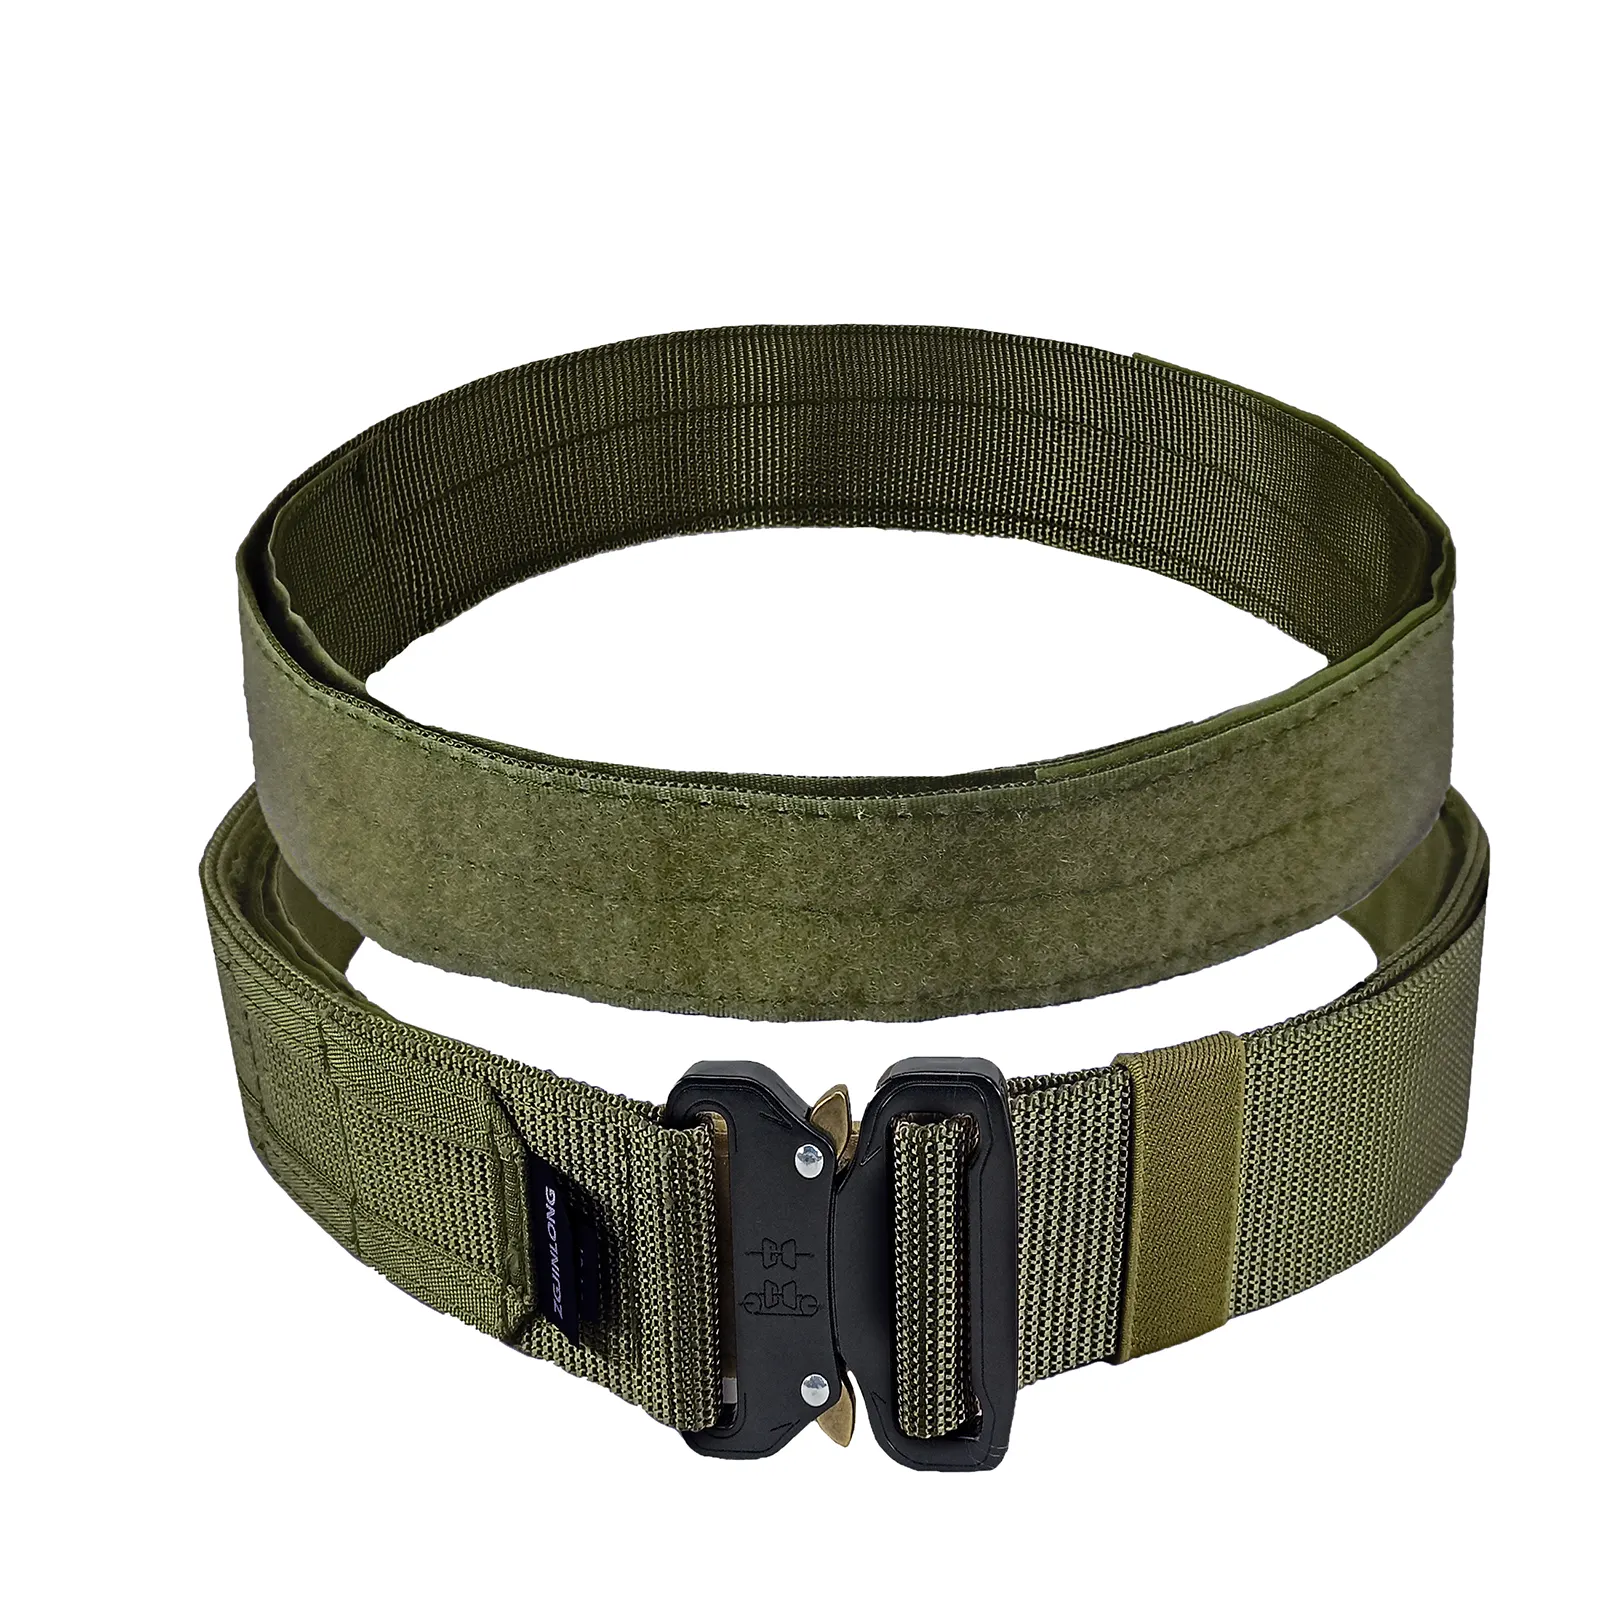 Quick Release Buckle Tactical Battle Belt Nylon Molle Belt with EDC Inner Belt for Law Enforcement